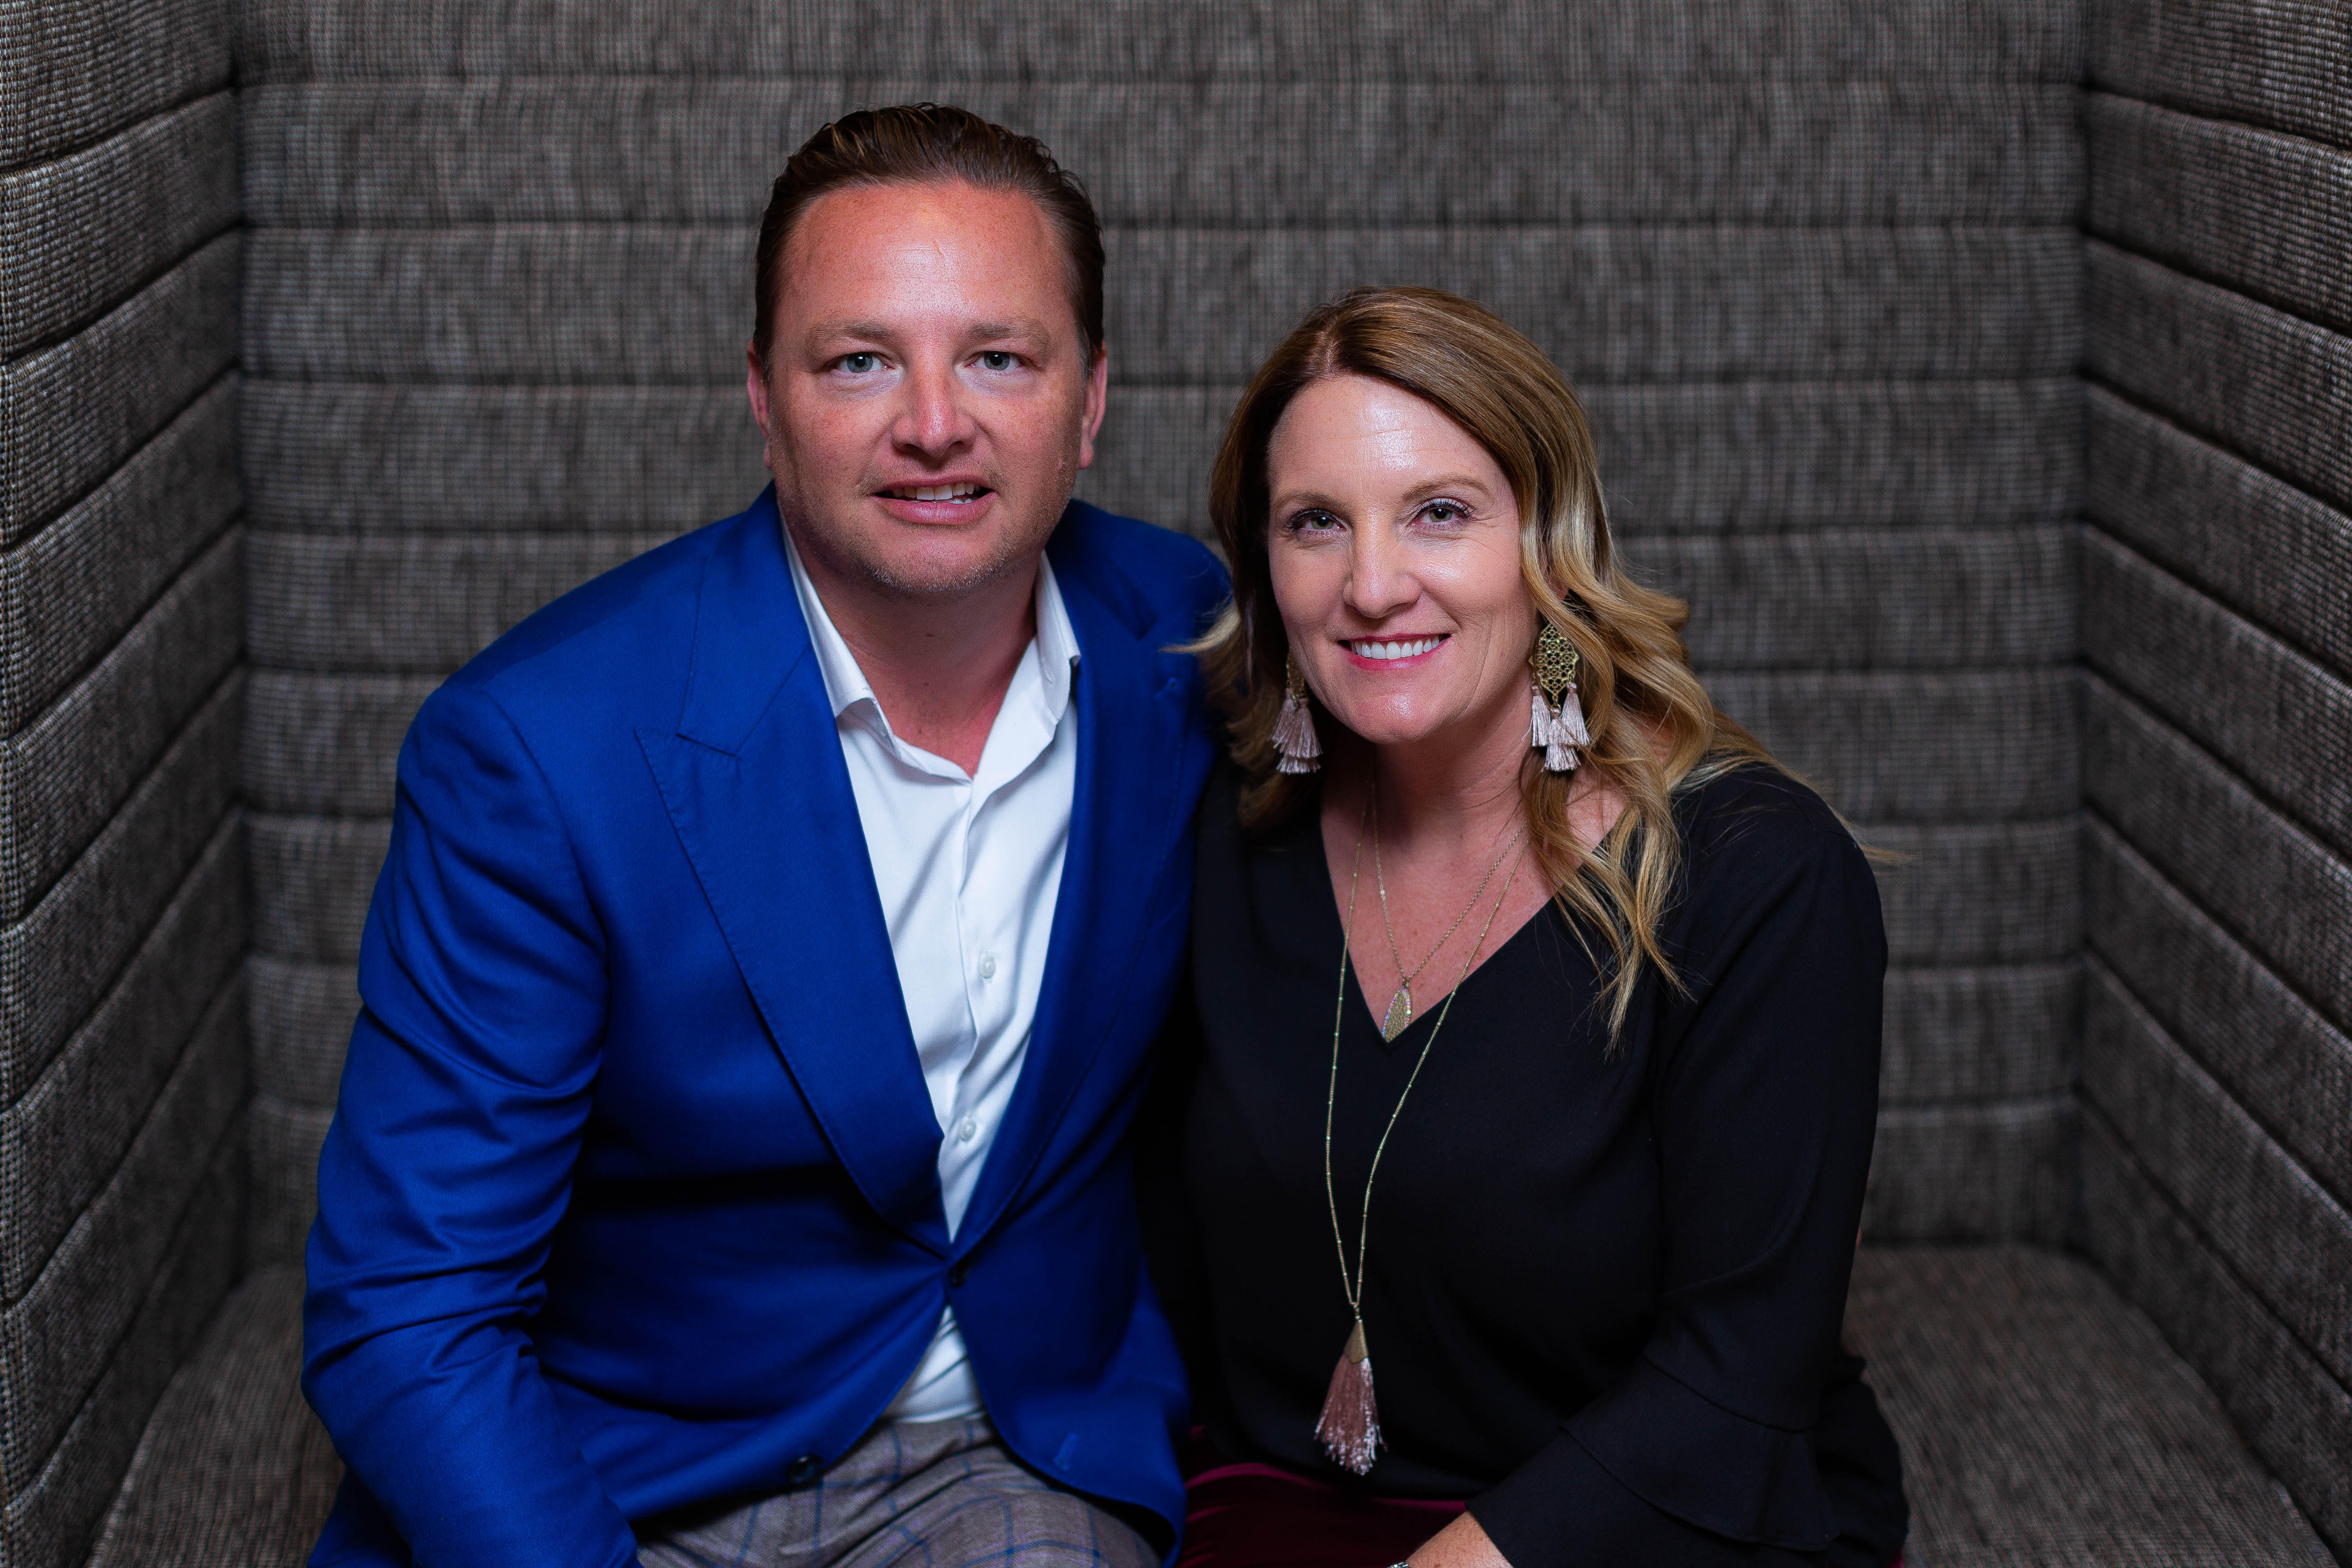 Bonvera Profiles in Leadership: Kirk & Nicole Porter